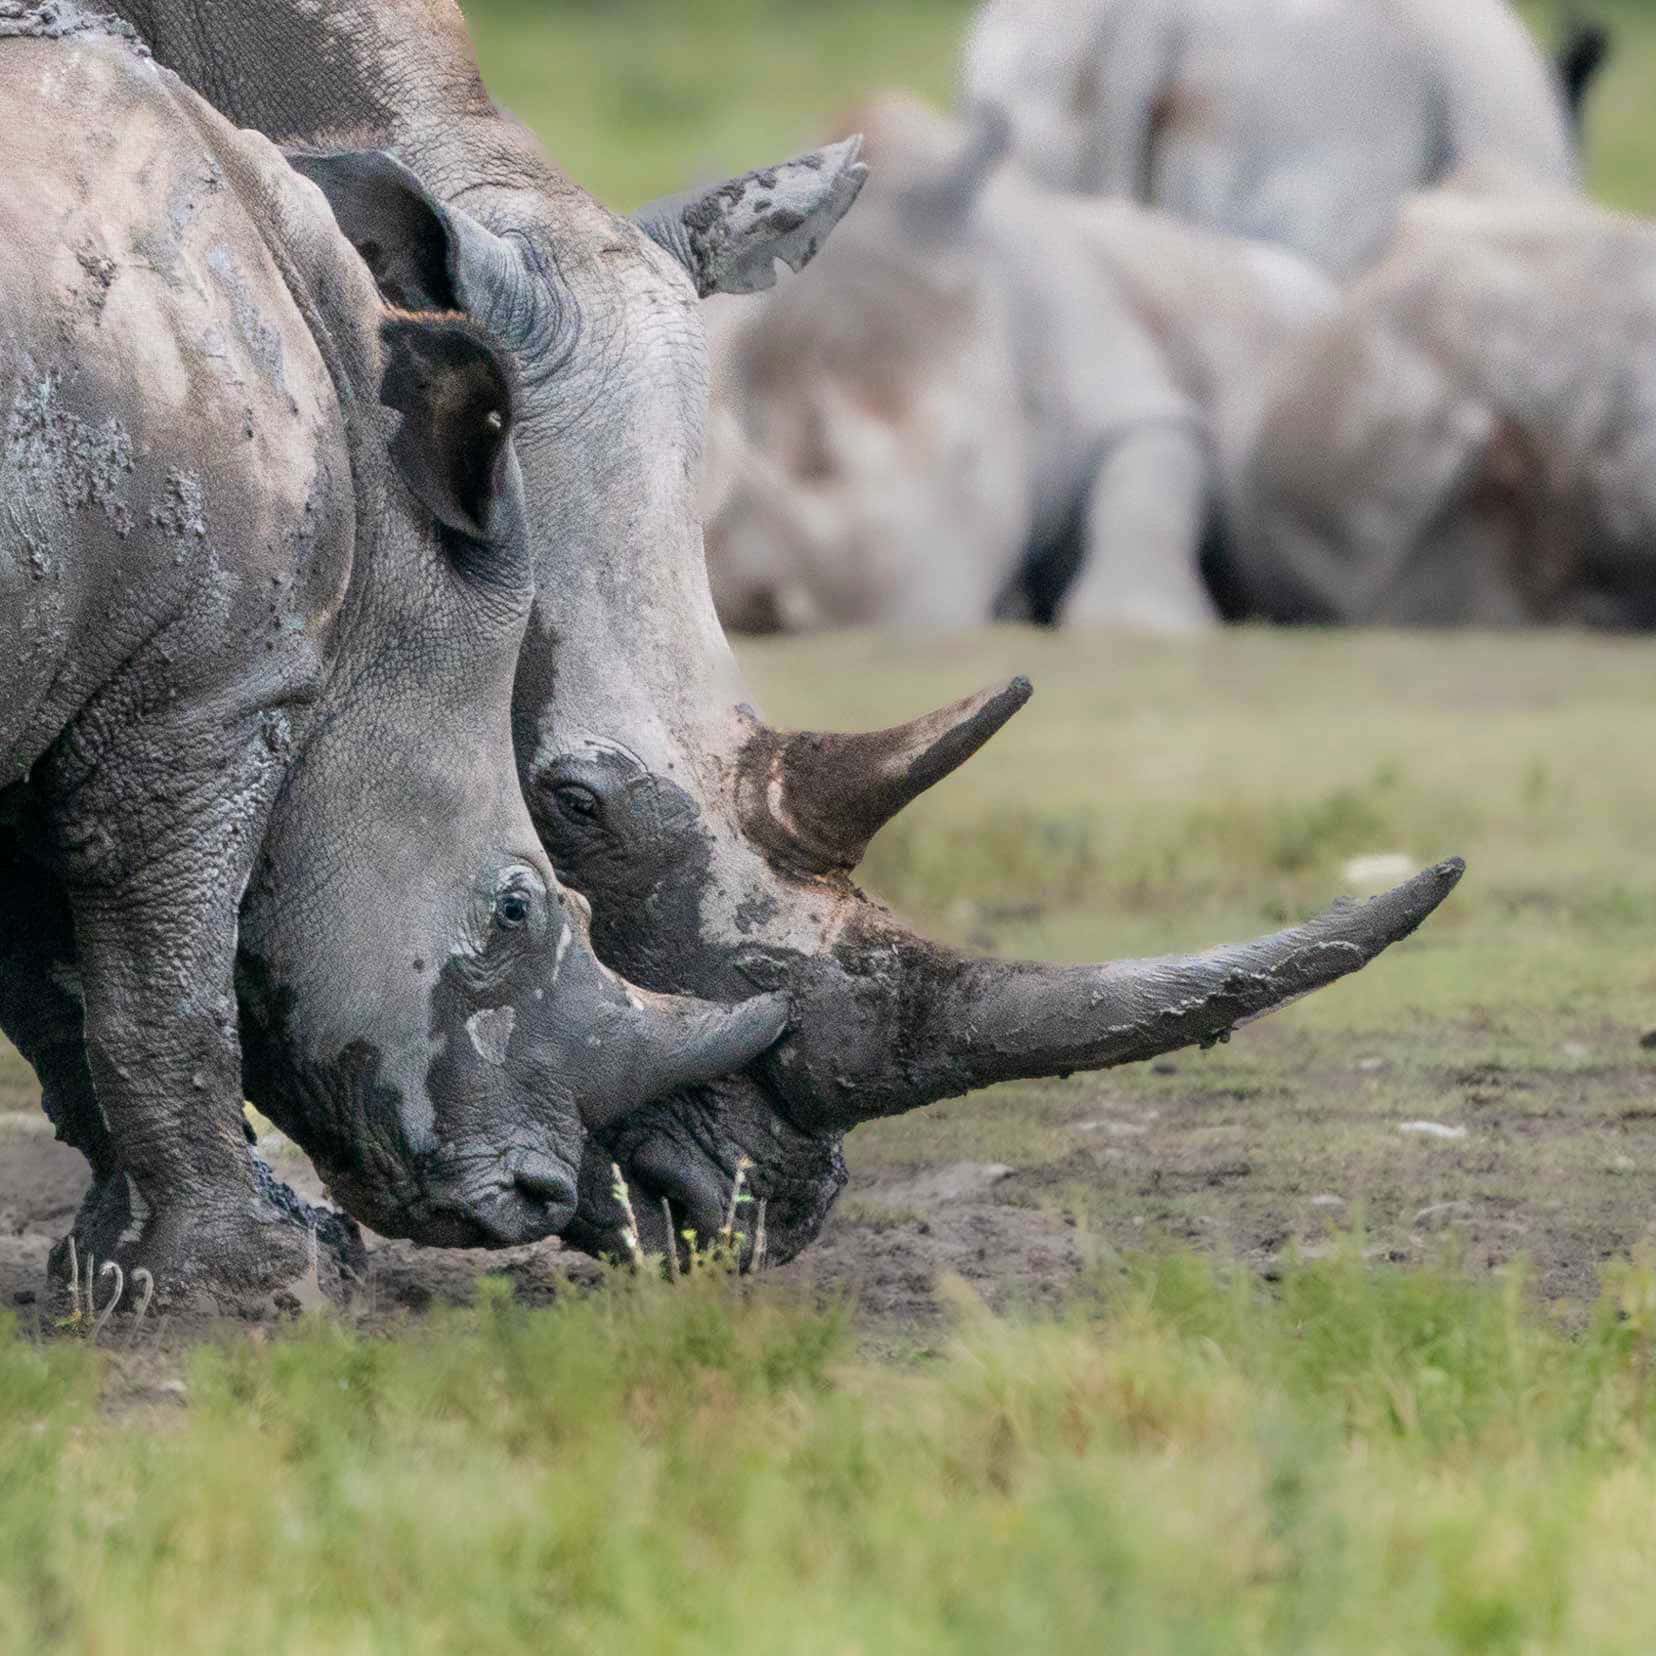 Two rhinos head to head at Khama Rhino Sanctuary Botswana